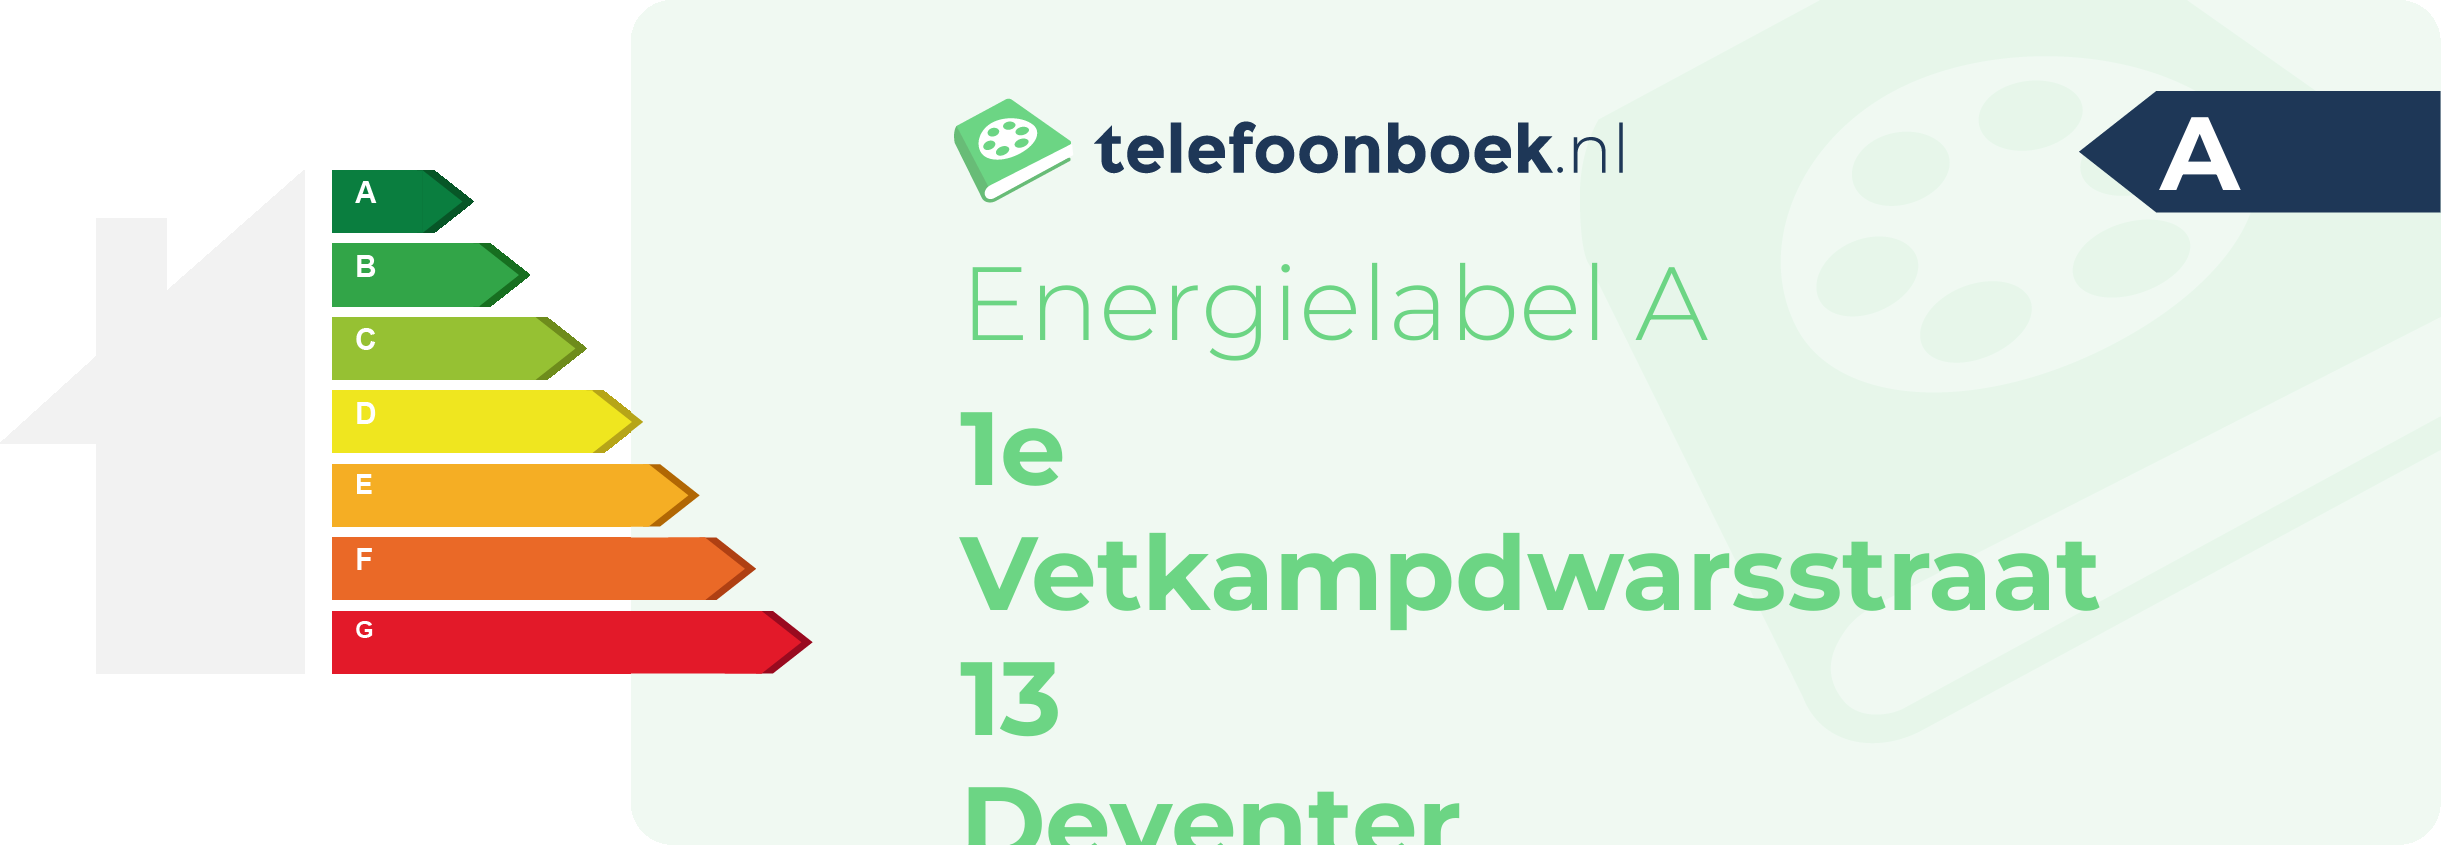 Energielabel 1e Vetkampdwarsstraat 13 Deventer